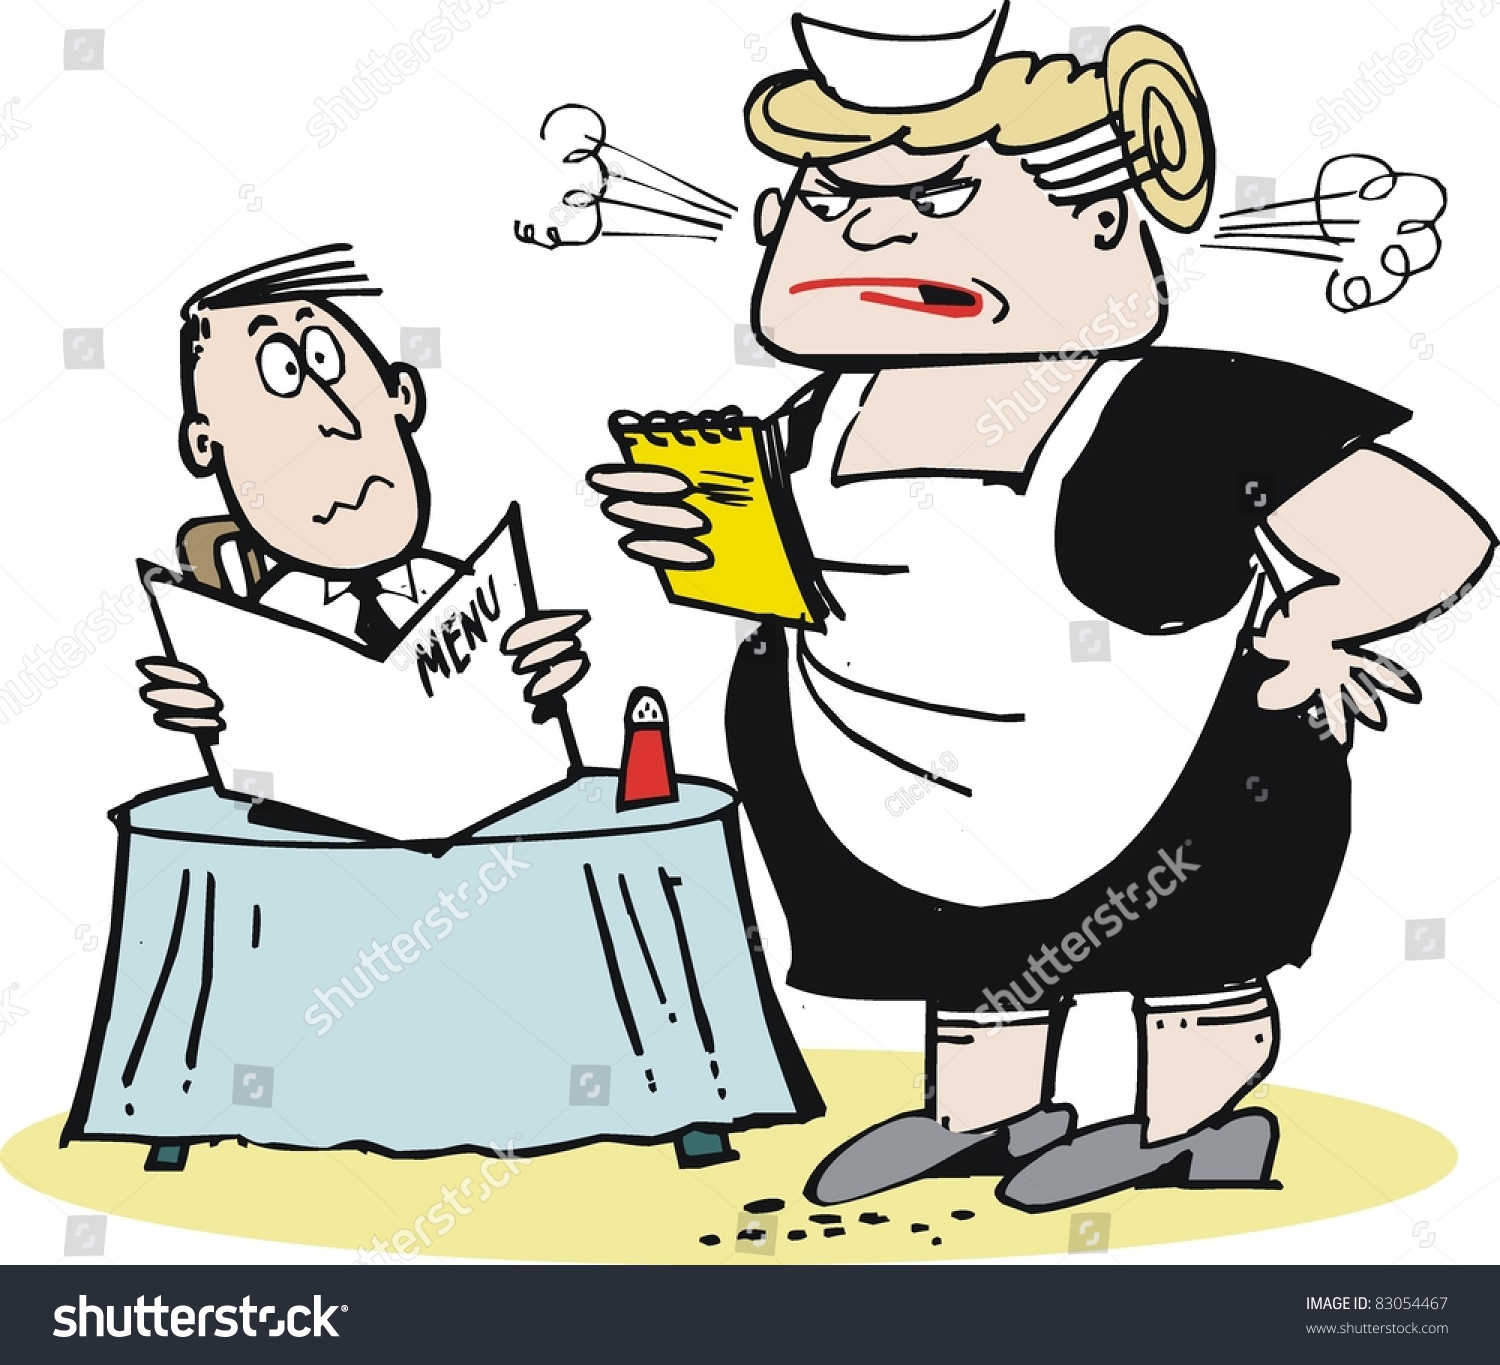 stock-vector-vector-cartoon-of-angry-waitress-in-restaurant-83054467.jpg?width=300